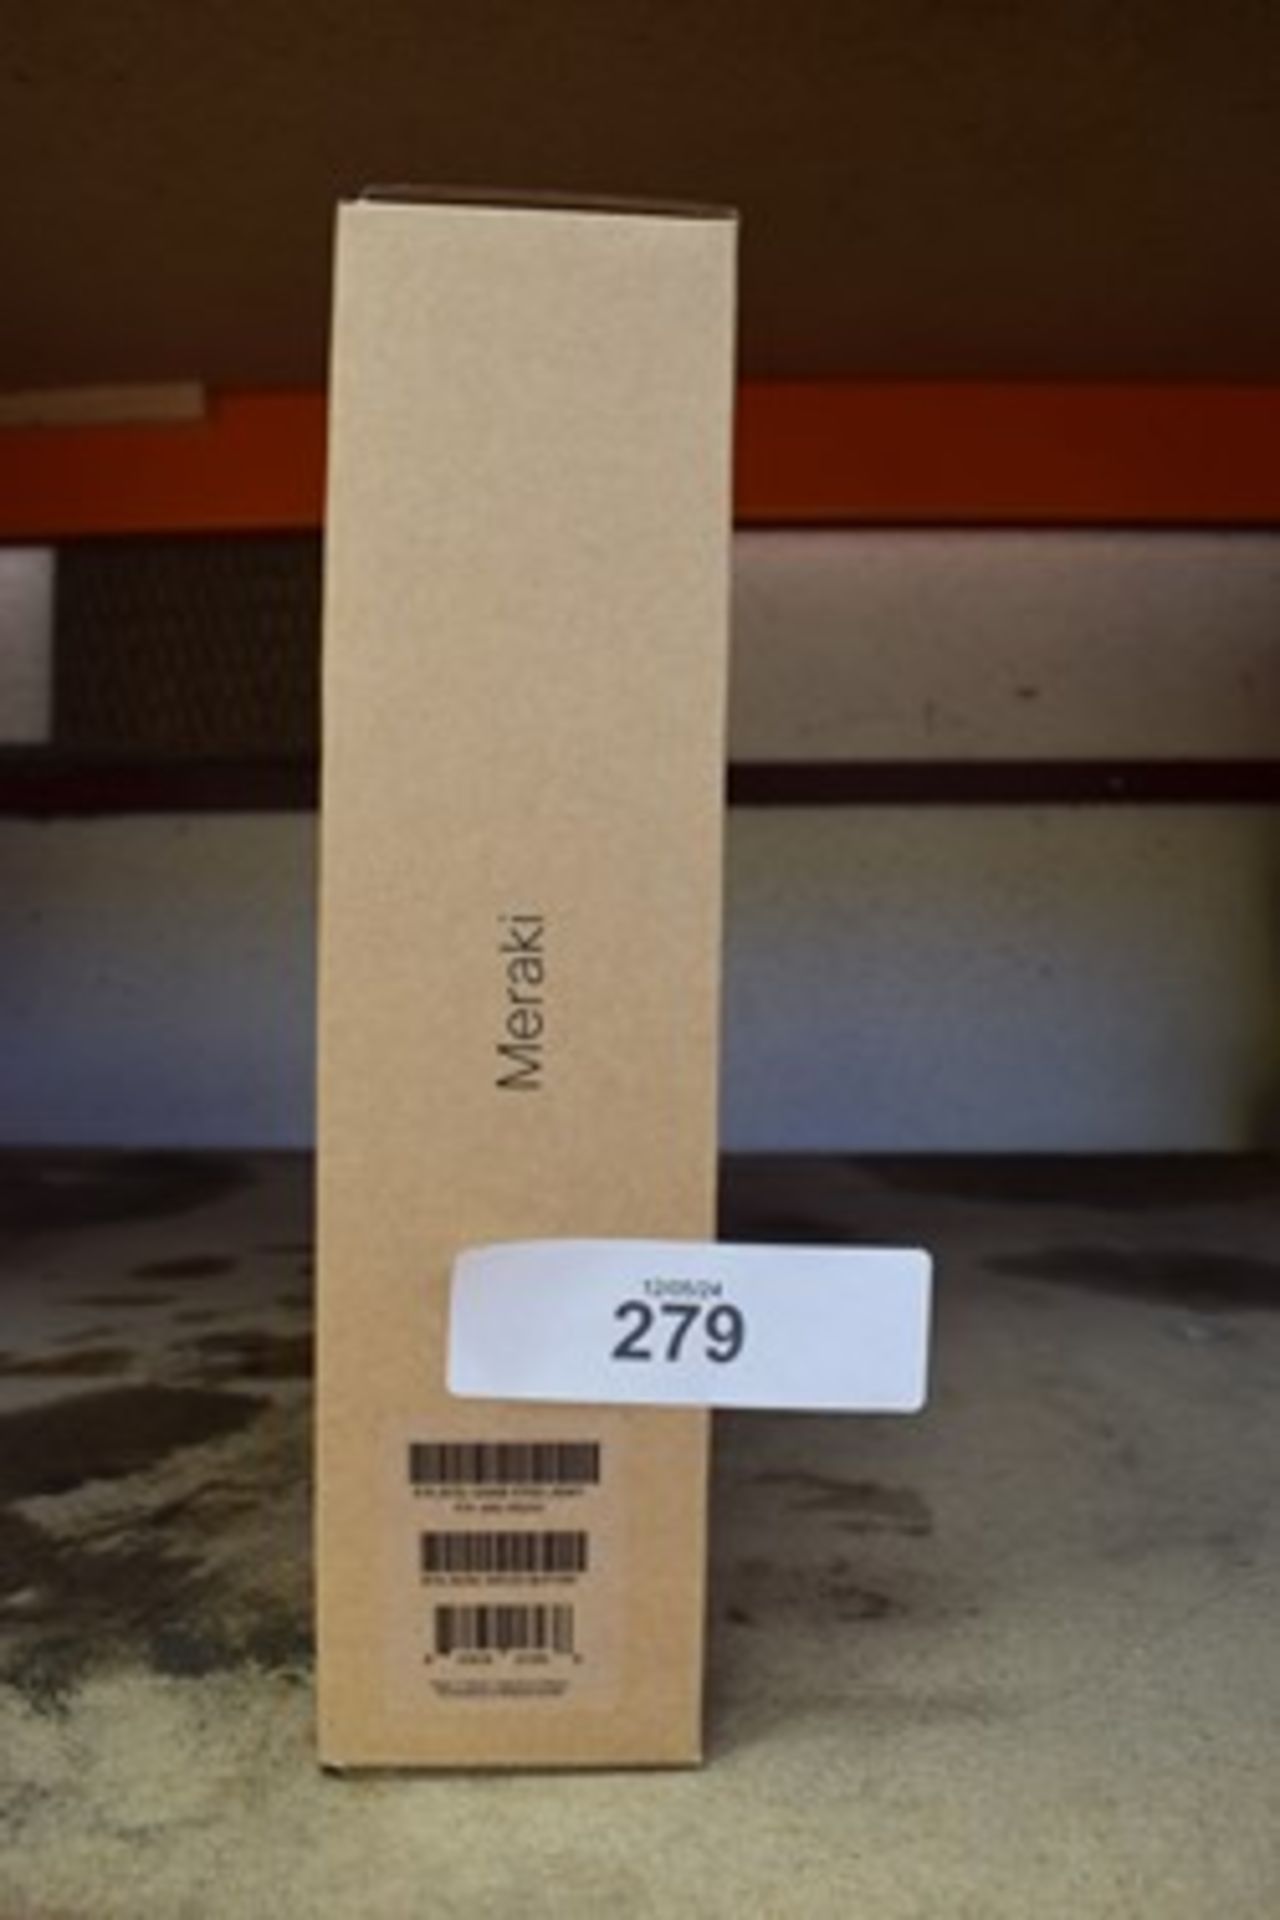 1 x Cisco Meraki, MS120-8LP unit, product No: A90-16200 - sealed new in box (C18)